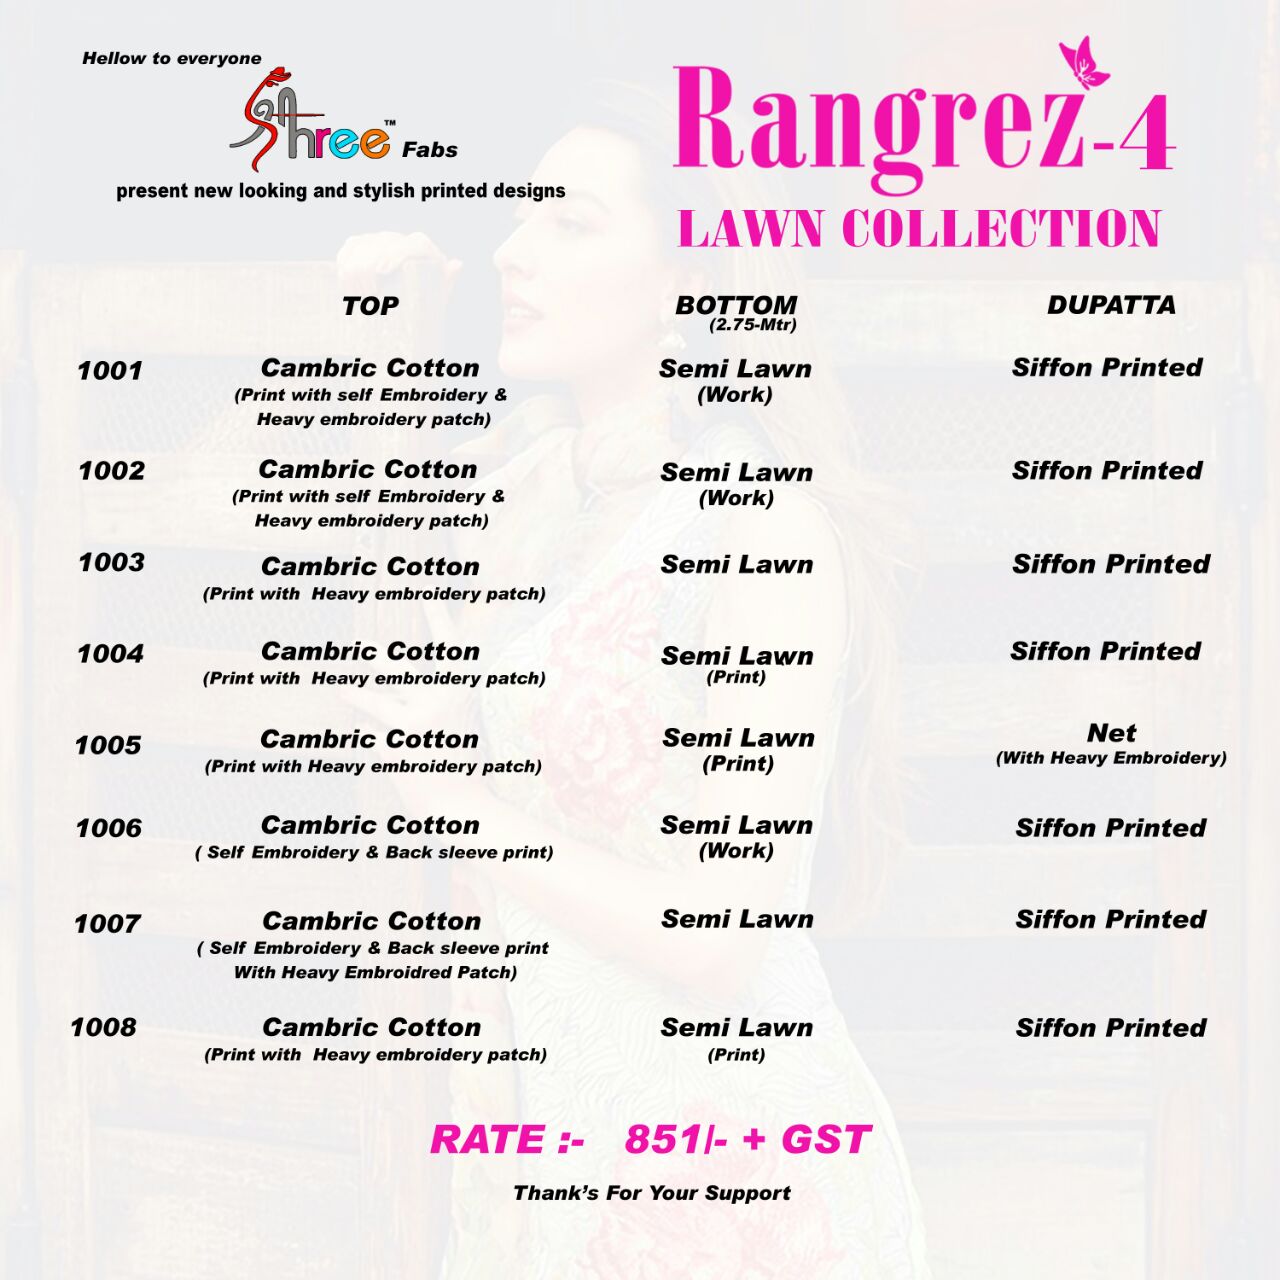 Shree Fabs rangrez 4 lawn Collection Salwar Kameez Collection Dealer